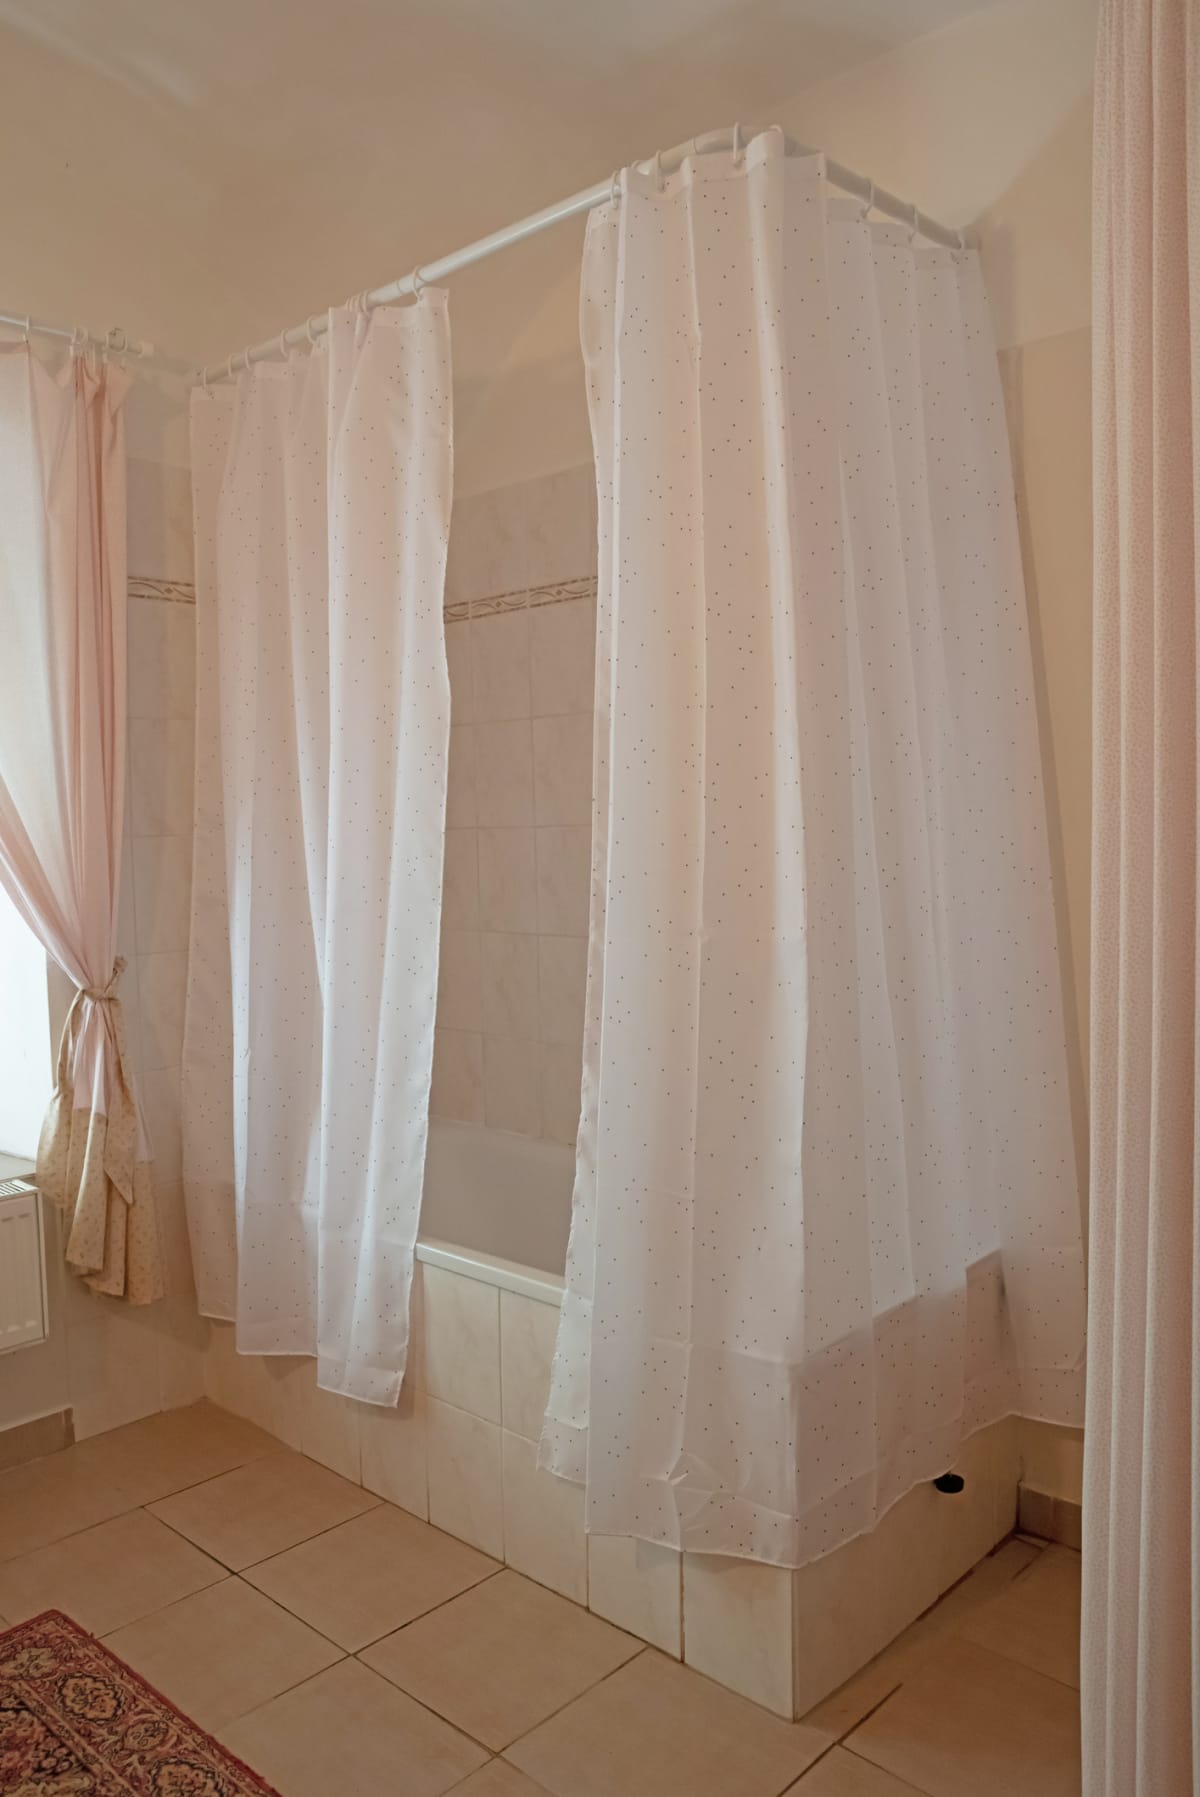 Shower curtain in an old tiled bathroom